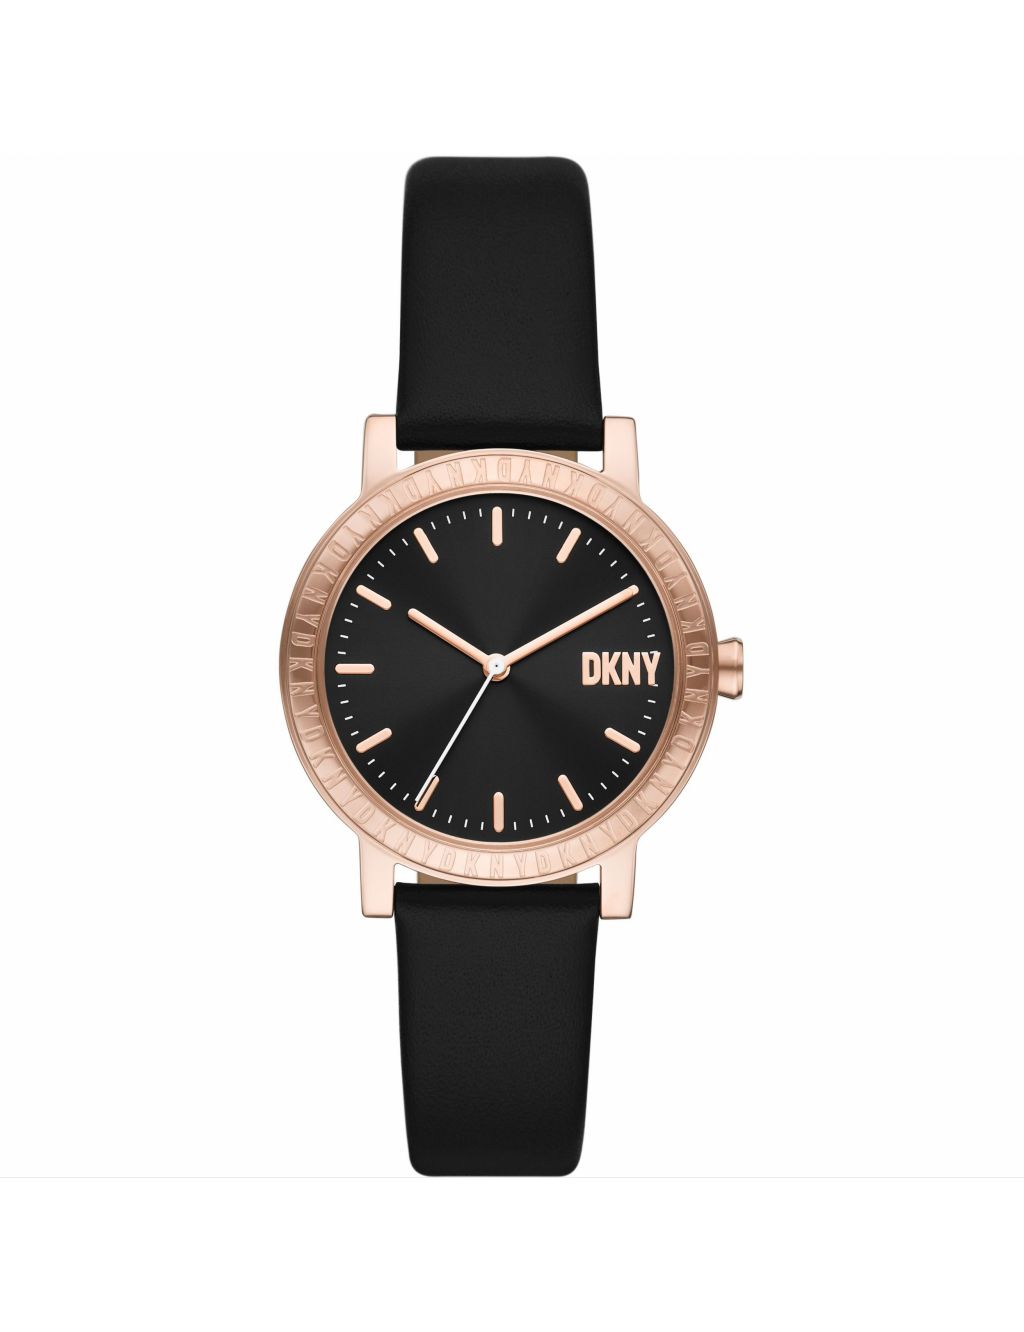 DKNY 7th Avenue Black Leather Watch